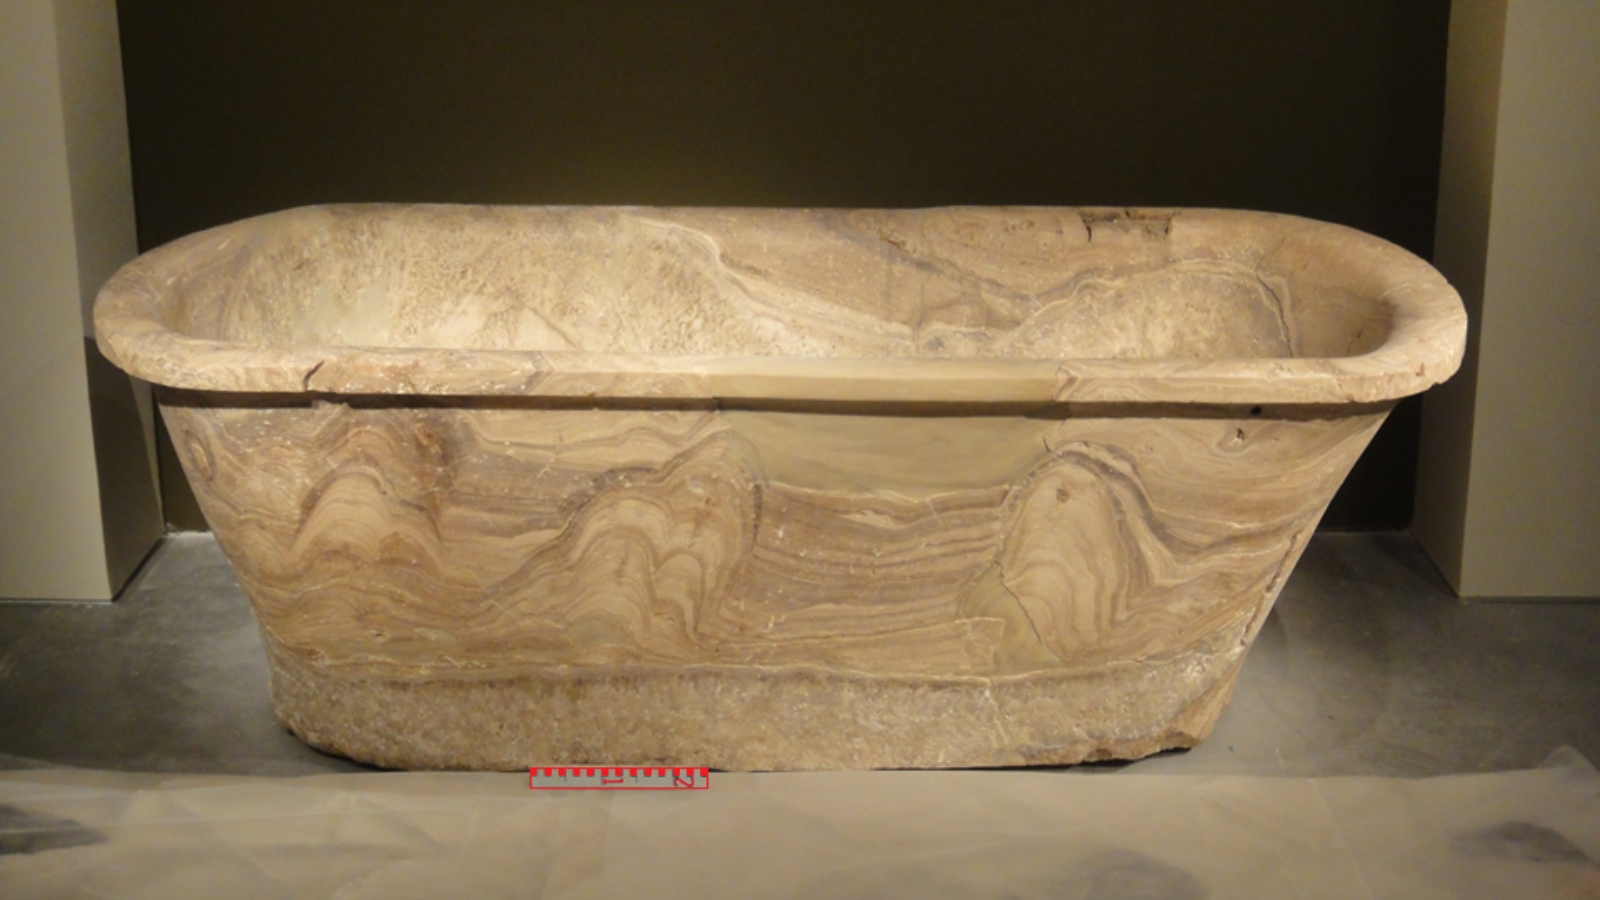 Herod’s royal calcite-alabaster bathtub, found in Kypros fortress. Photo by Prof. Amos Frumkin, The Hebrew University of Jerusalem